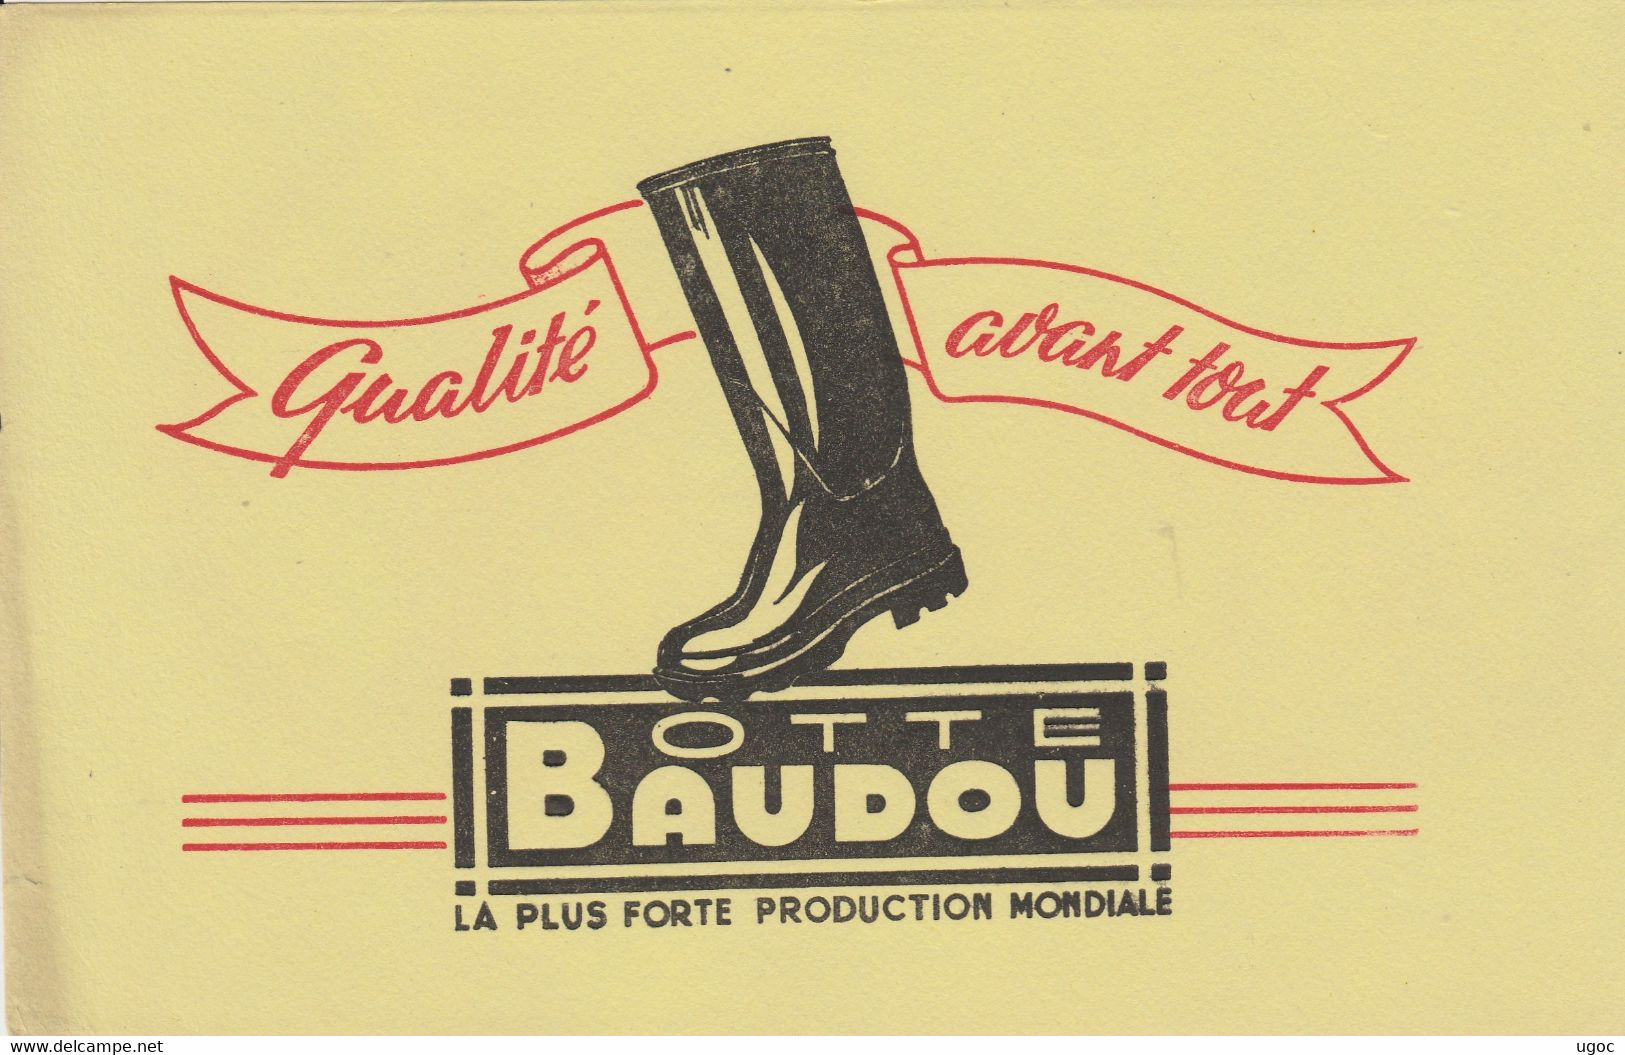 BUVARD  CHAUSSURE  BAUDOU - 131 - Shoes